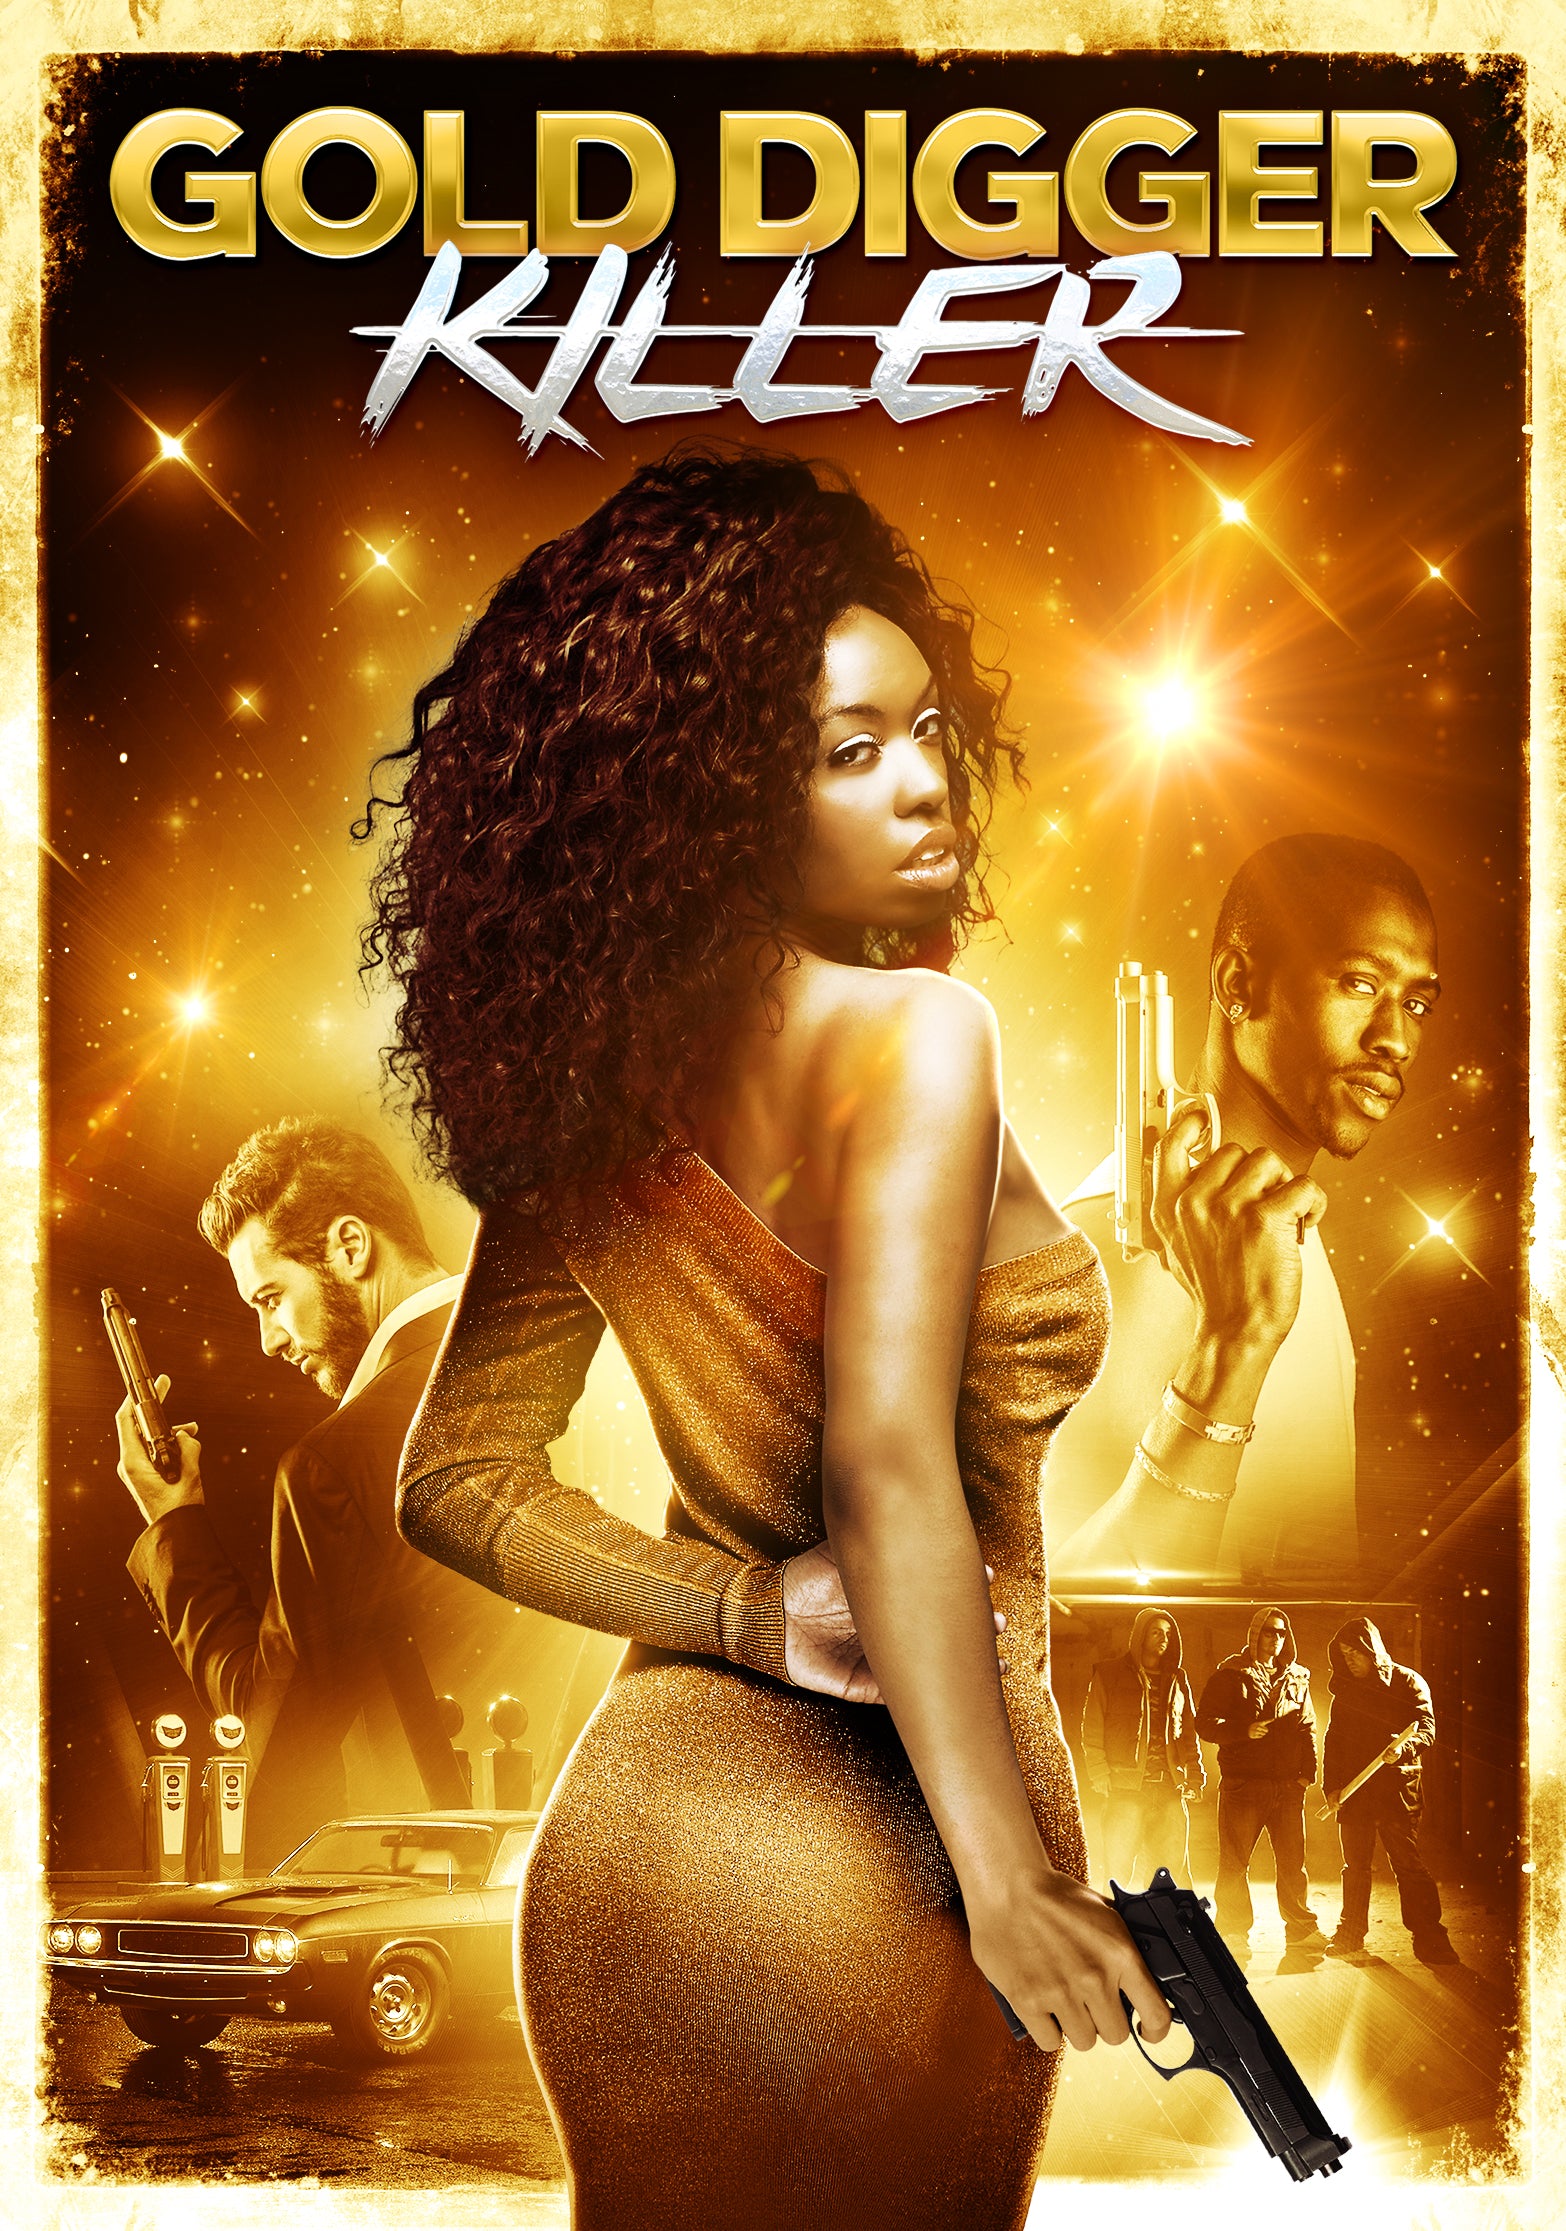 GOLD DIGGER KILLER DVD